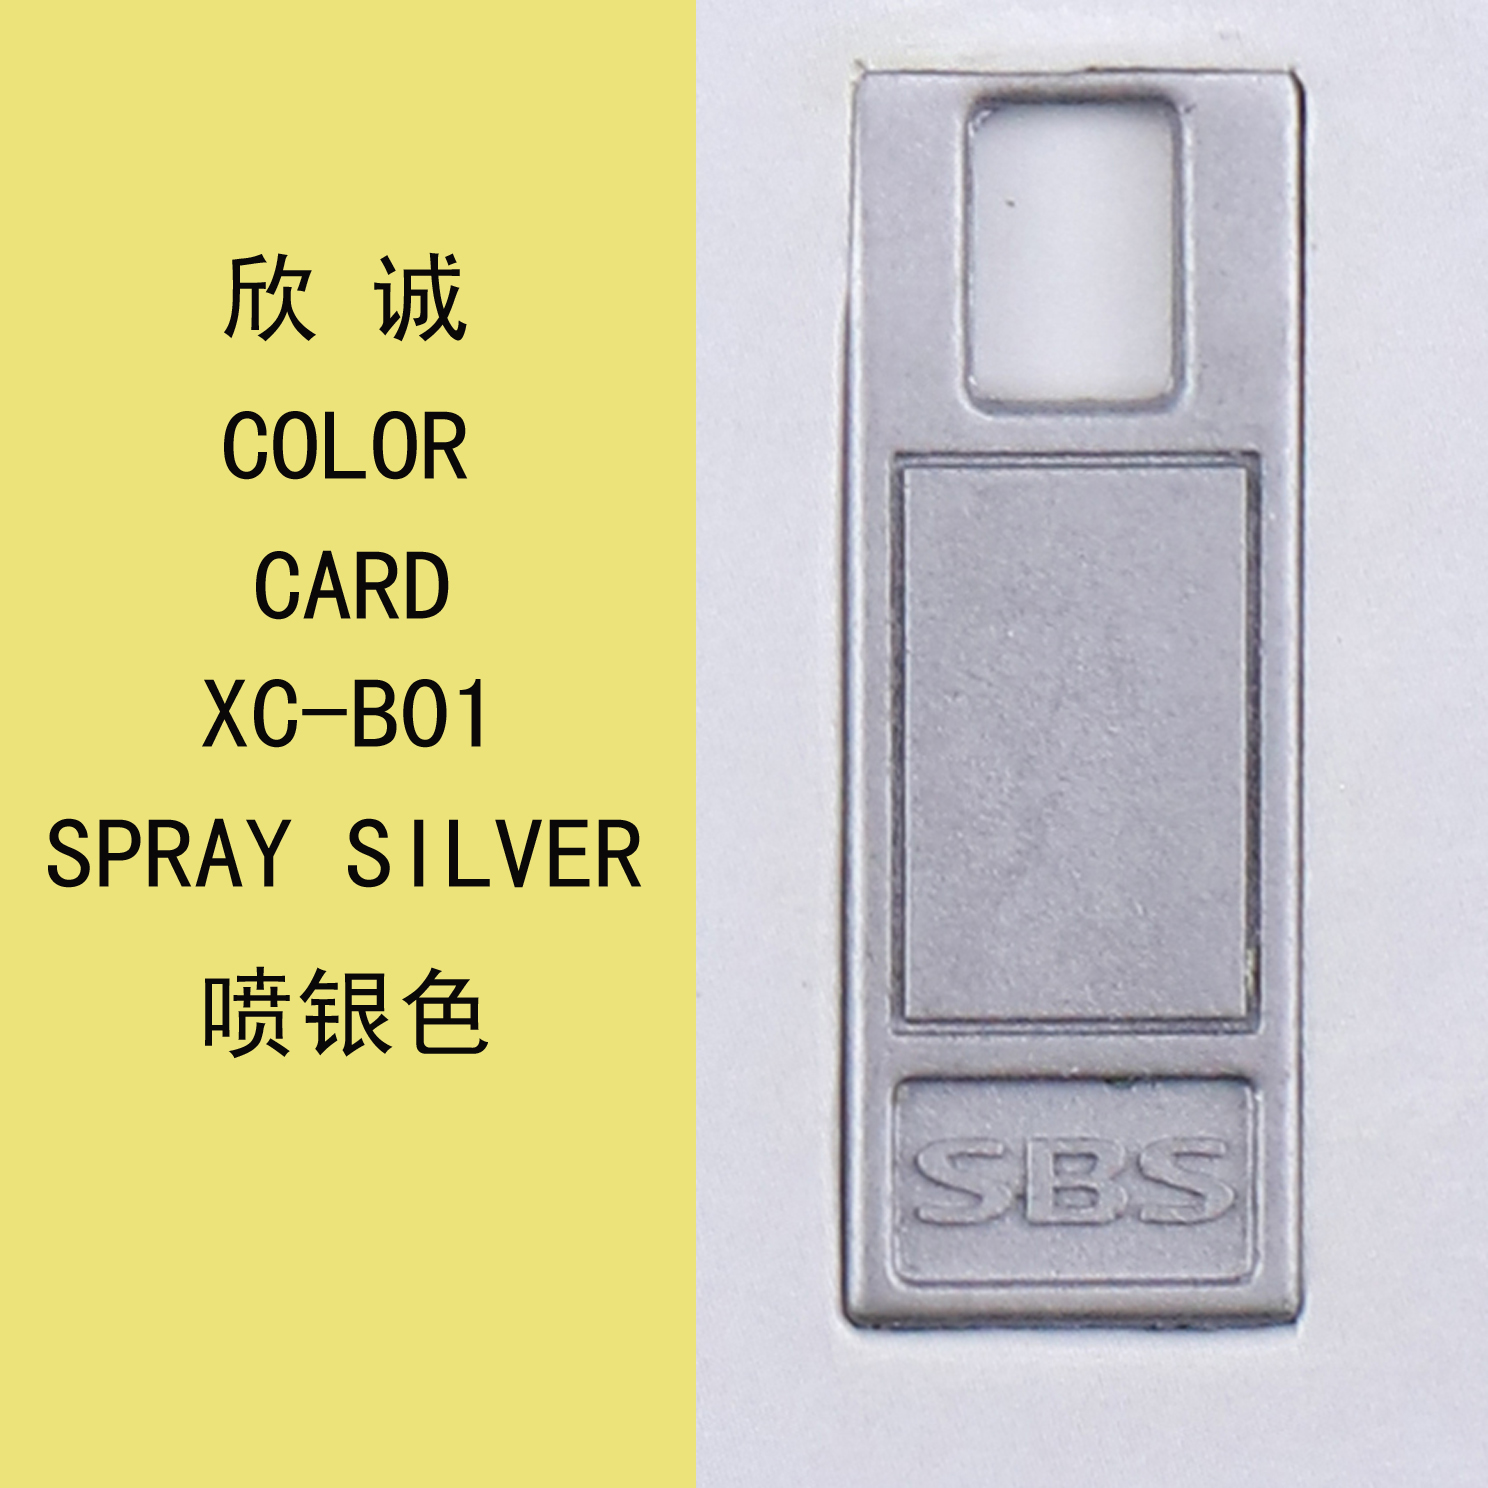 XC-B01噴銀色